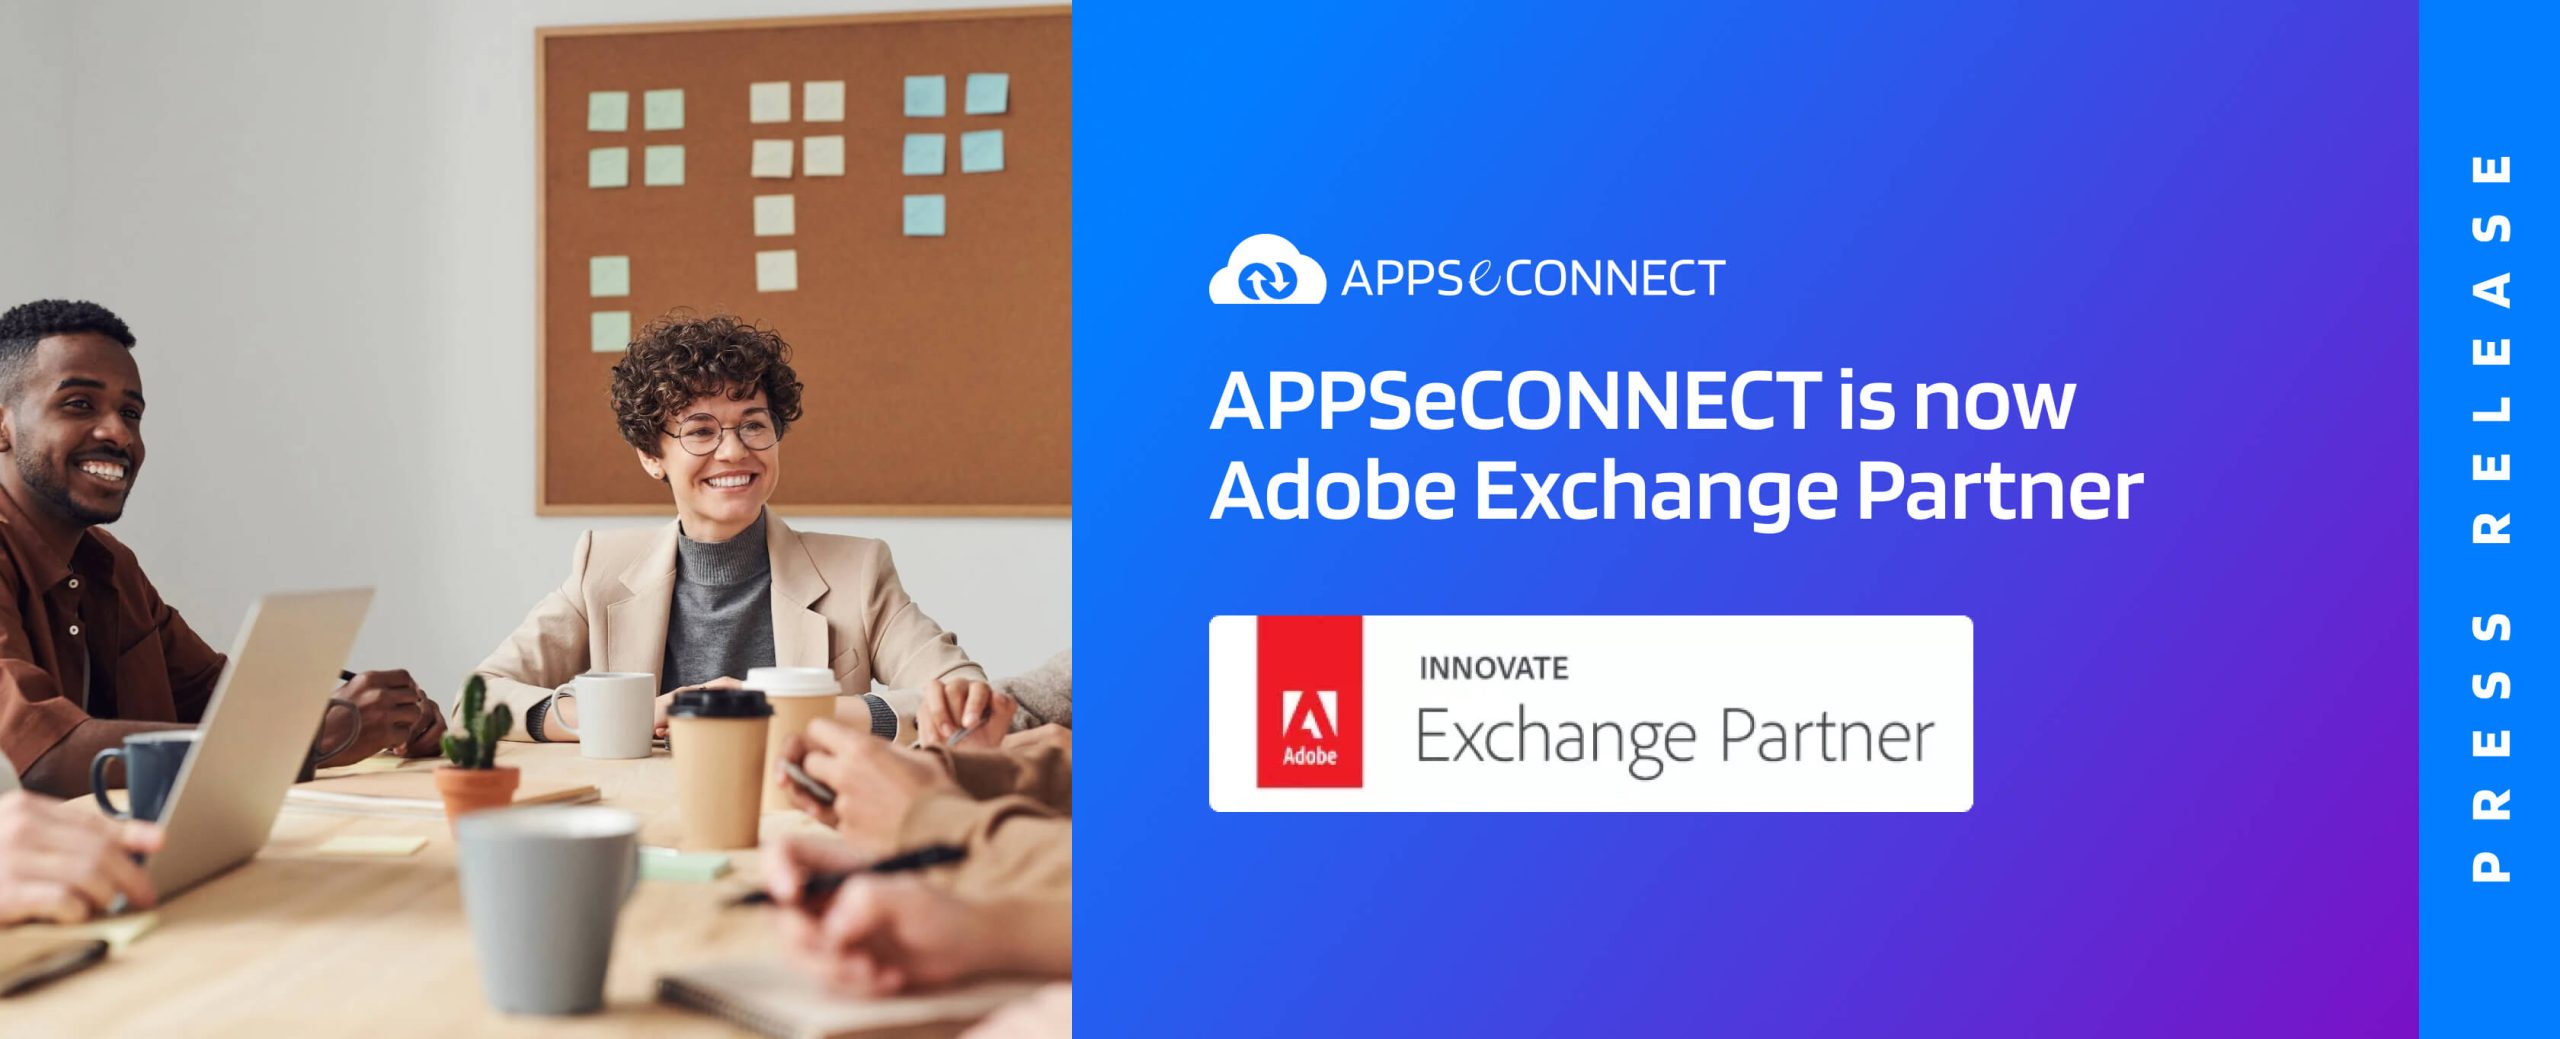 appseconnect-adobe-exchange-partner-innovate Image